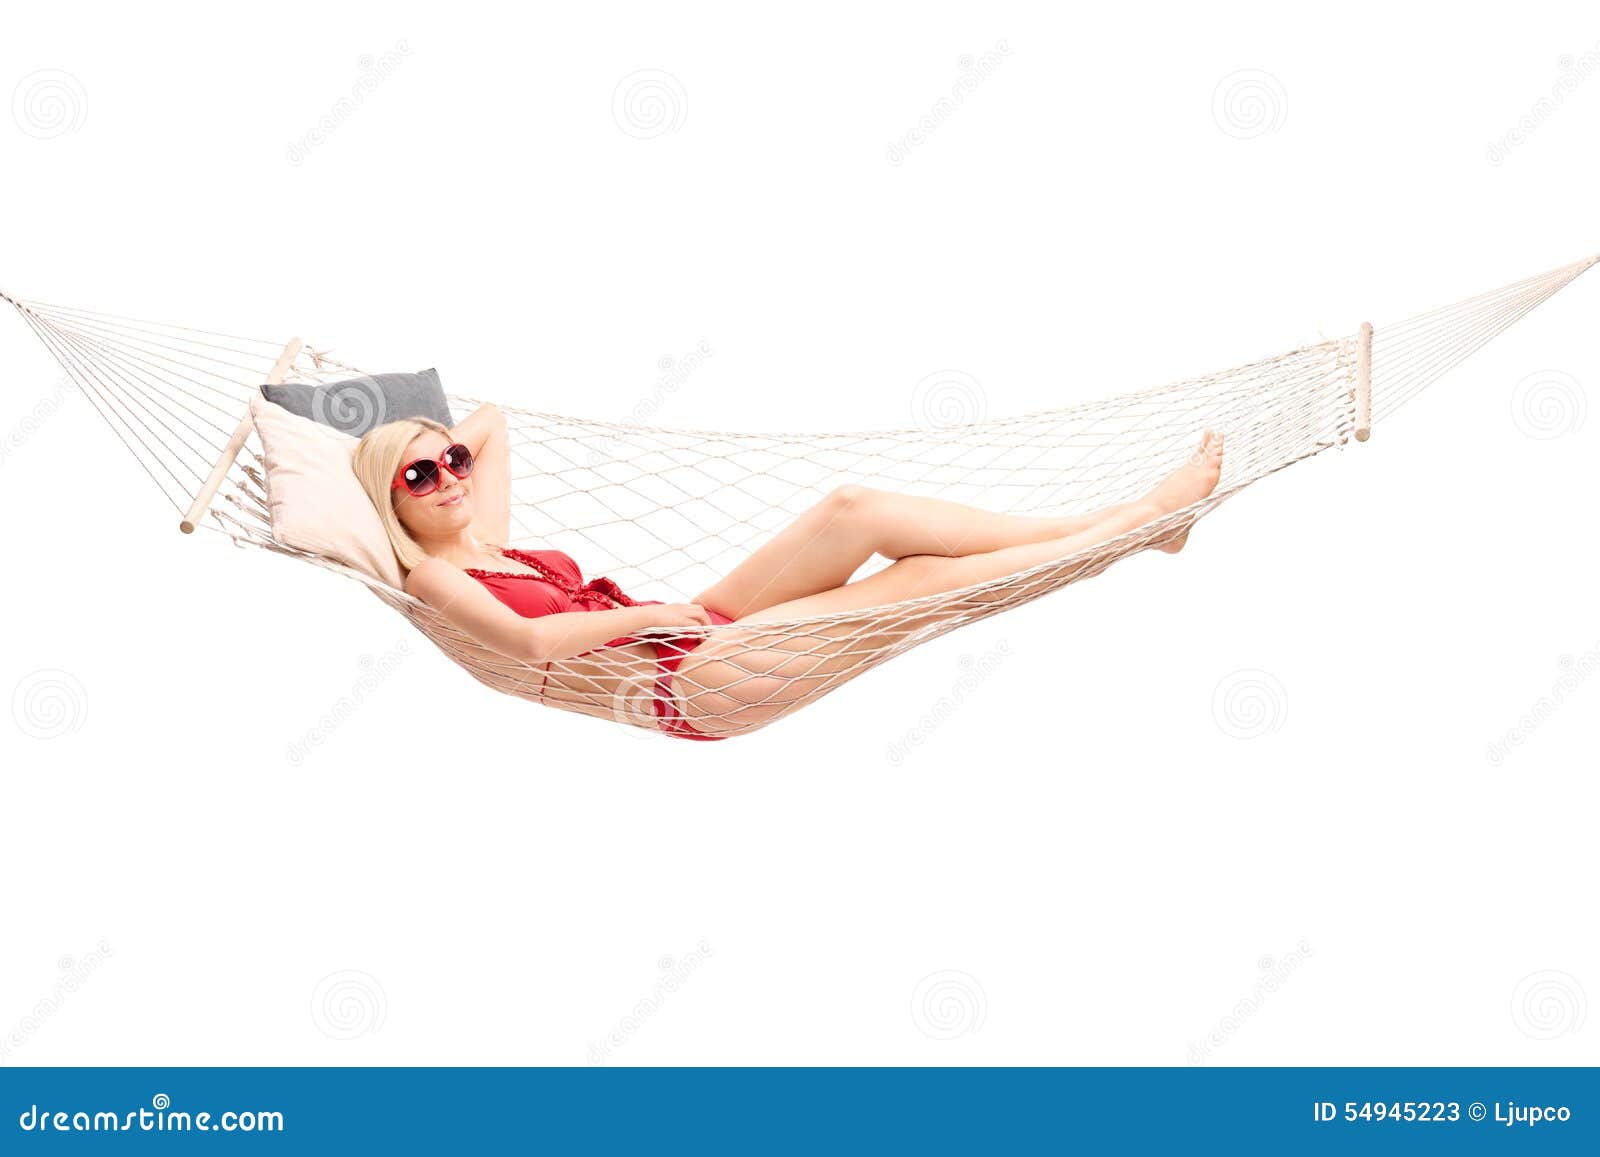 Bikini in hammock